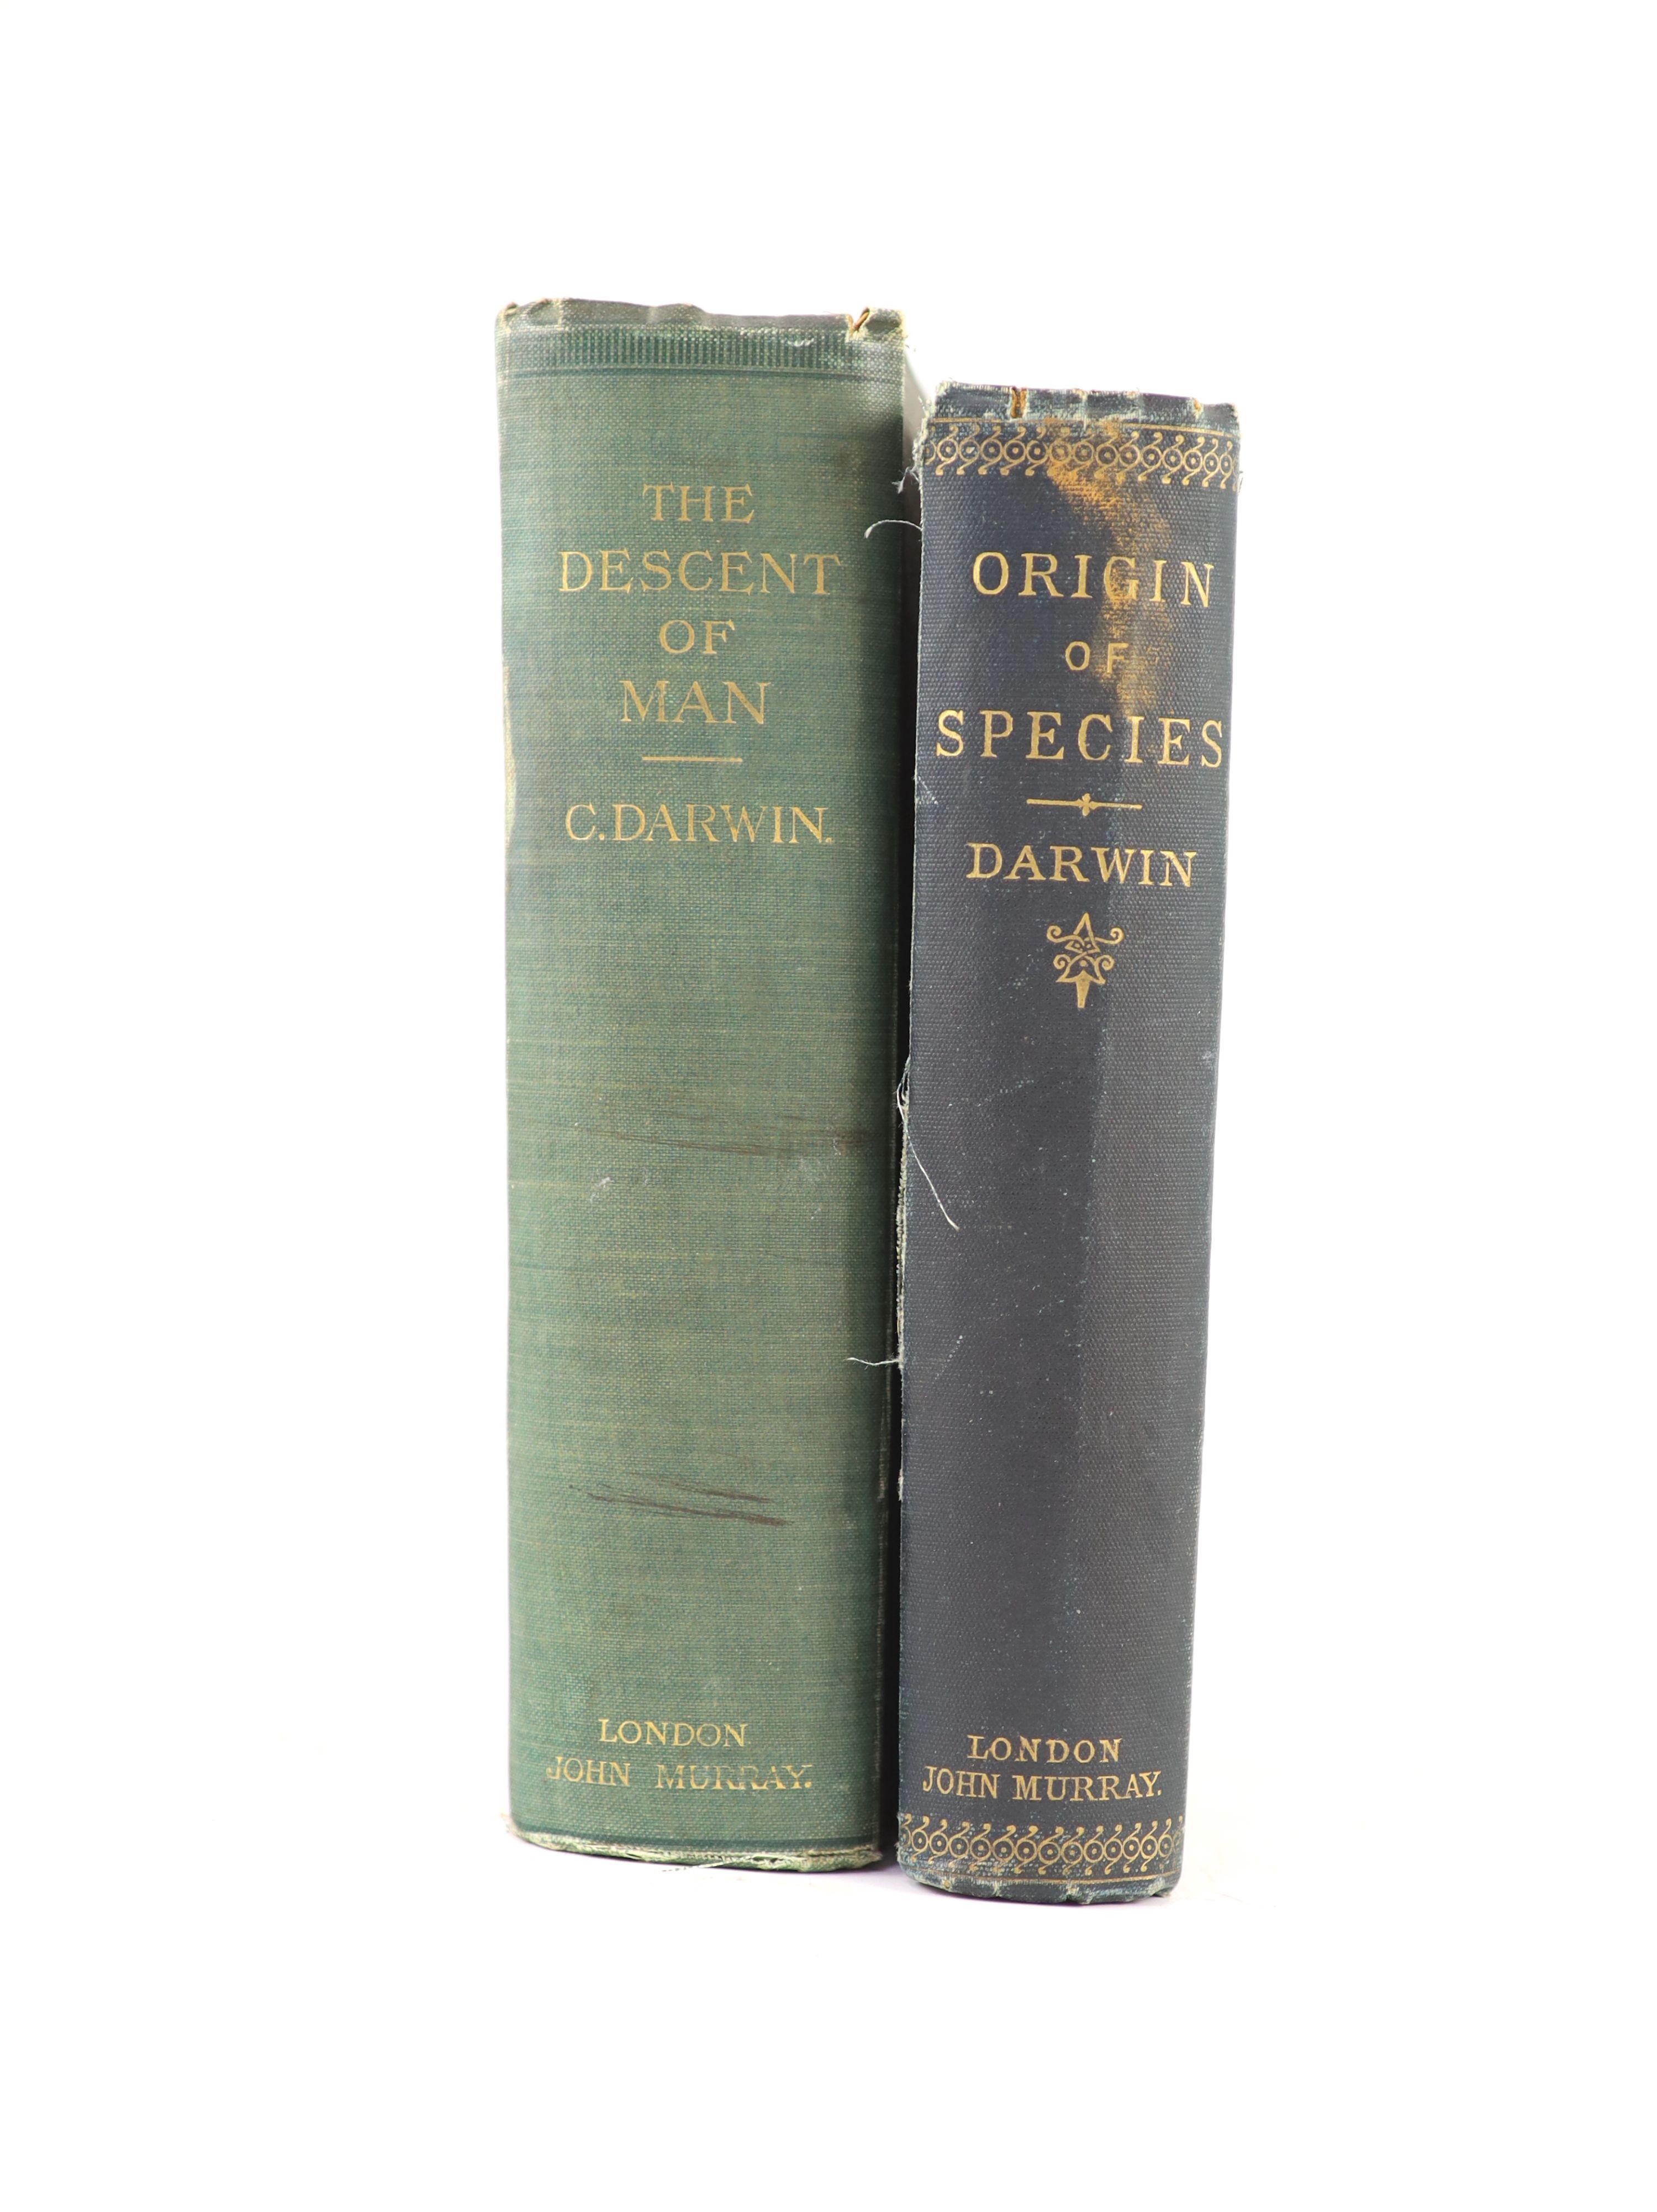 Darwin, Charles - The Origin of the Species, 6th edition, 8vo, original cloth, John Murray, London, 1895 and The Descent of Man, 8vo, original cloth, John Murray, London, 1901 (2)